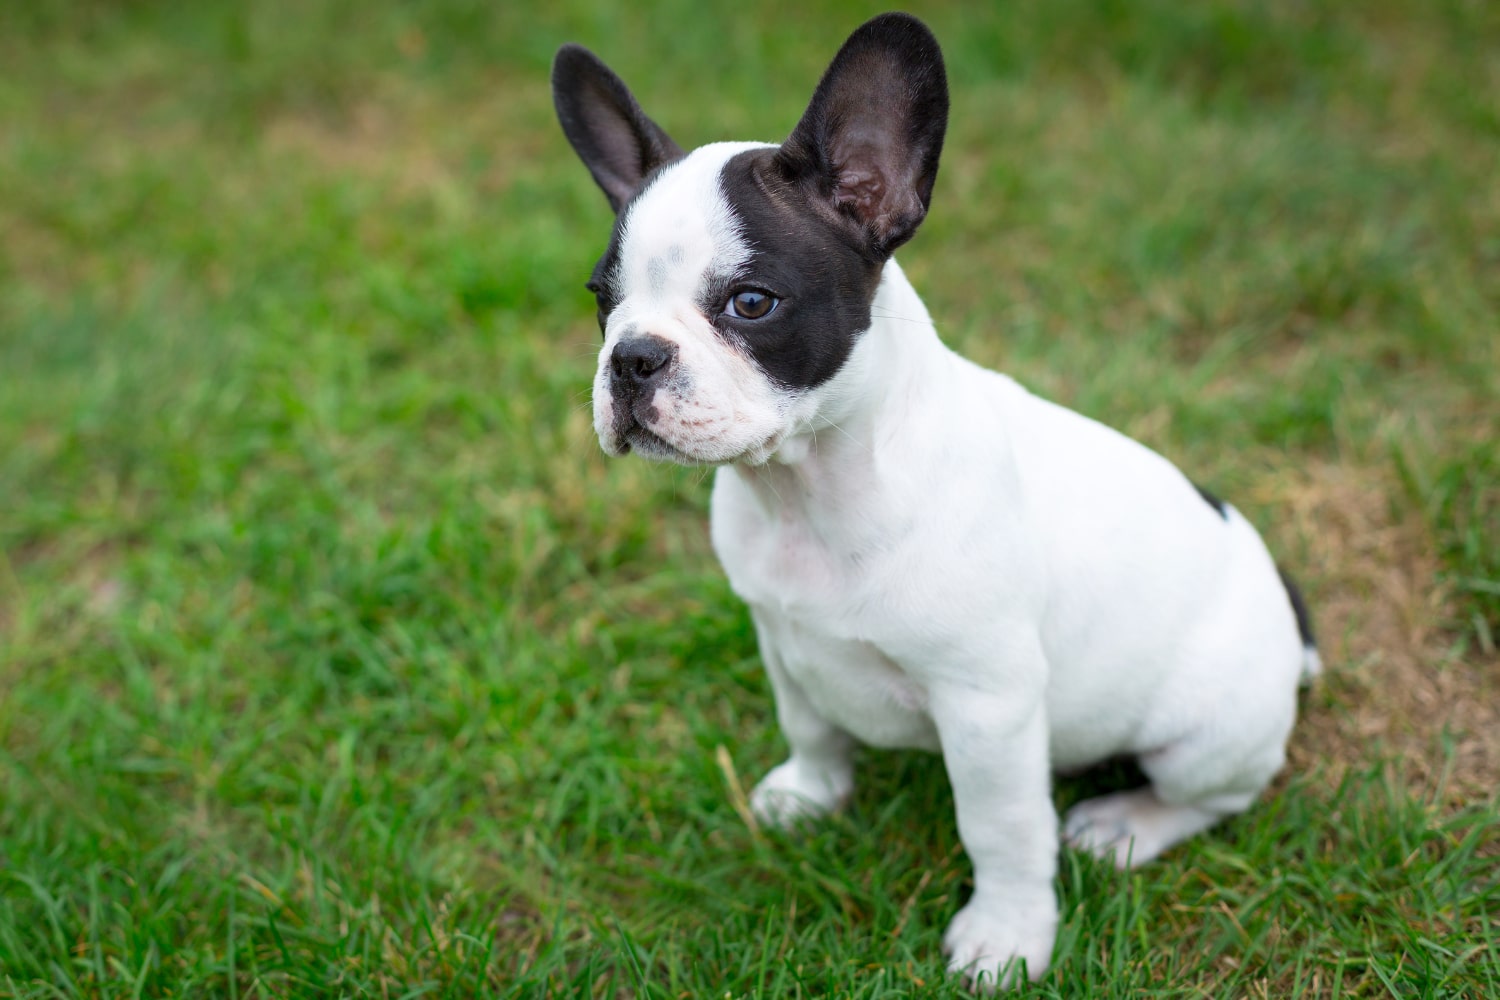 Baby the French Bulldog puppy